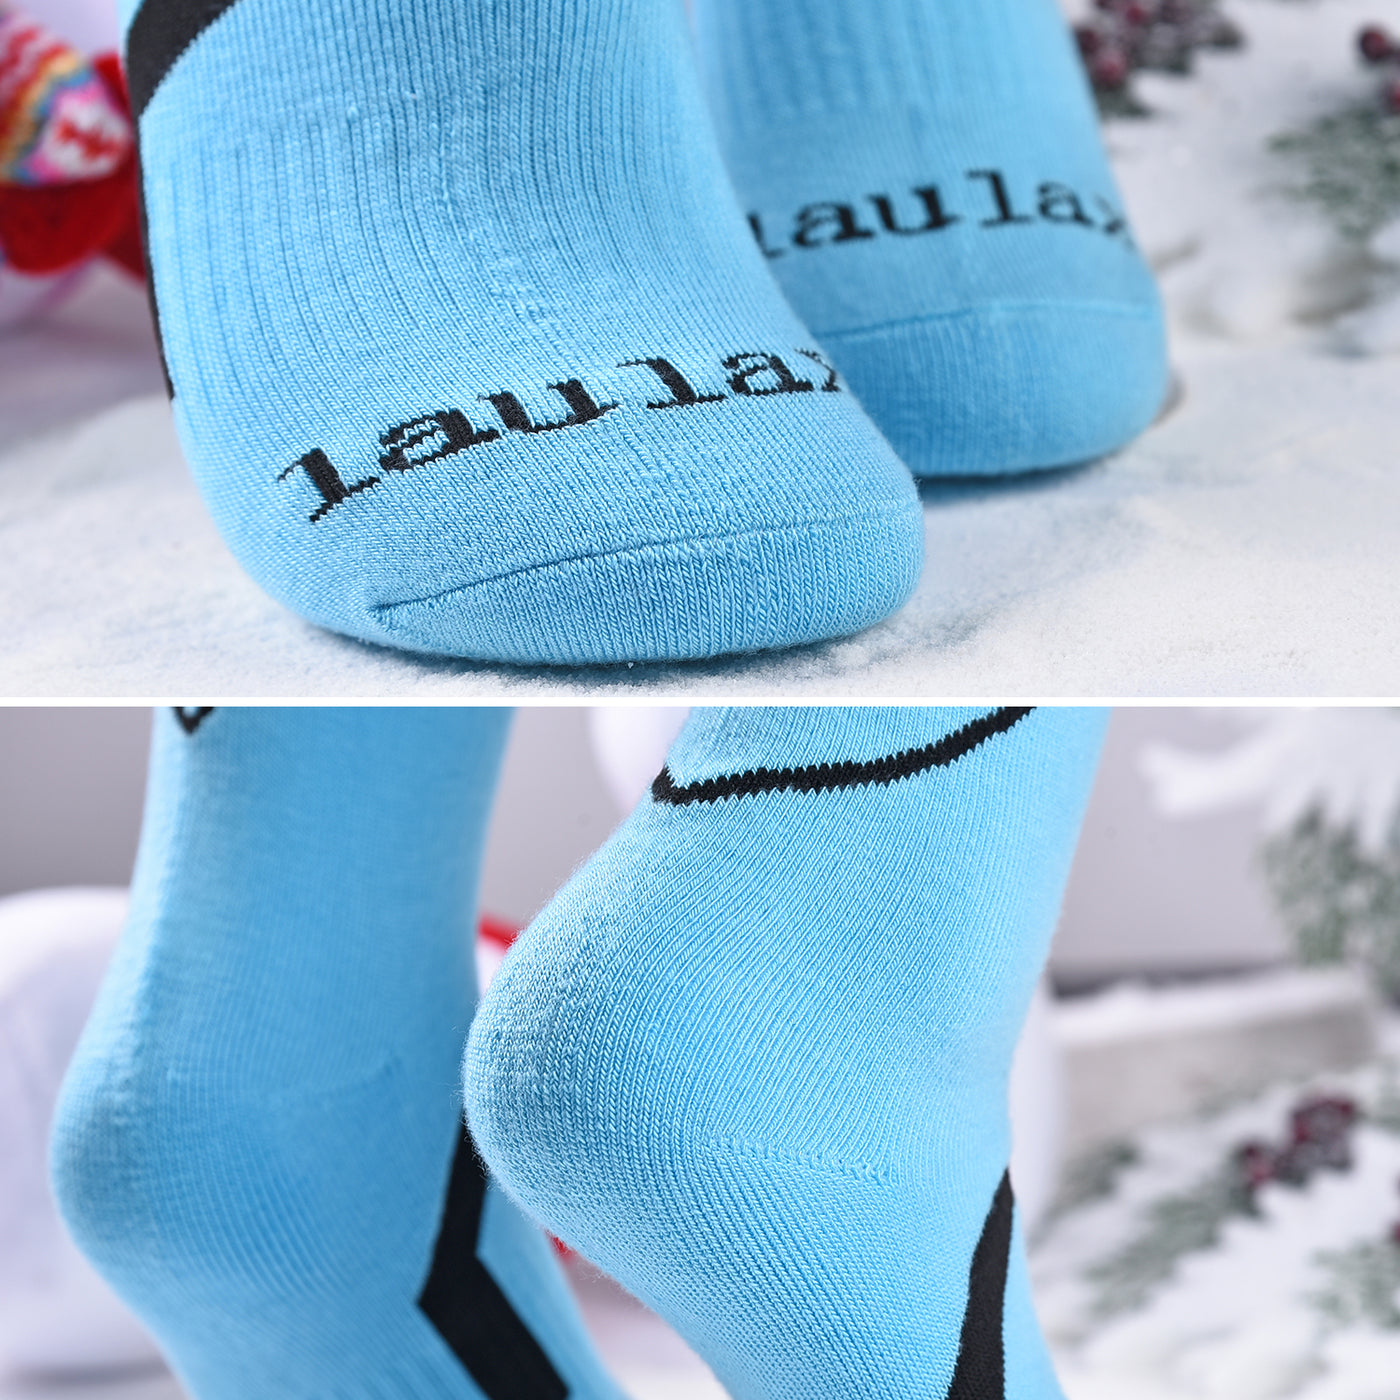 Laulax 3 Pairs Ladies Long Hose Cashmere-Like Ski Socks, Size UK 3 - 7 / Europe 36 - 40, Gift Set, Purple, Blue, Black